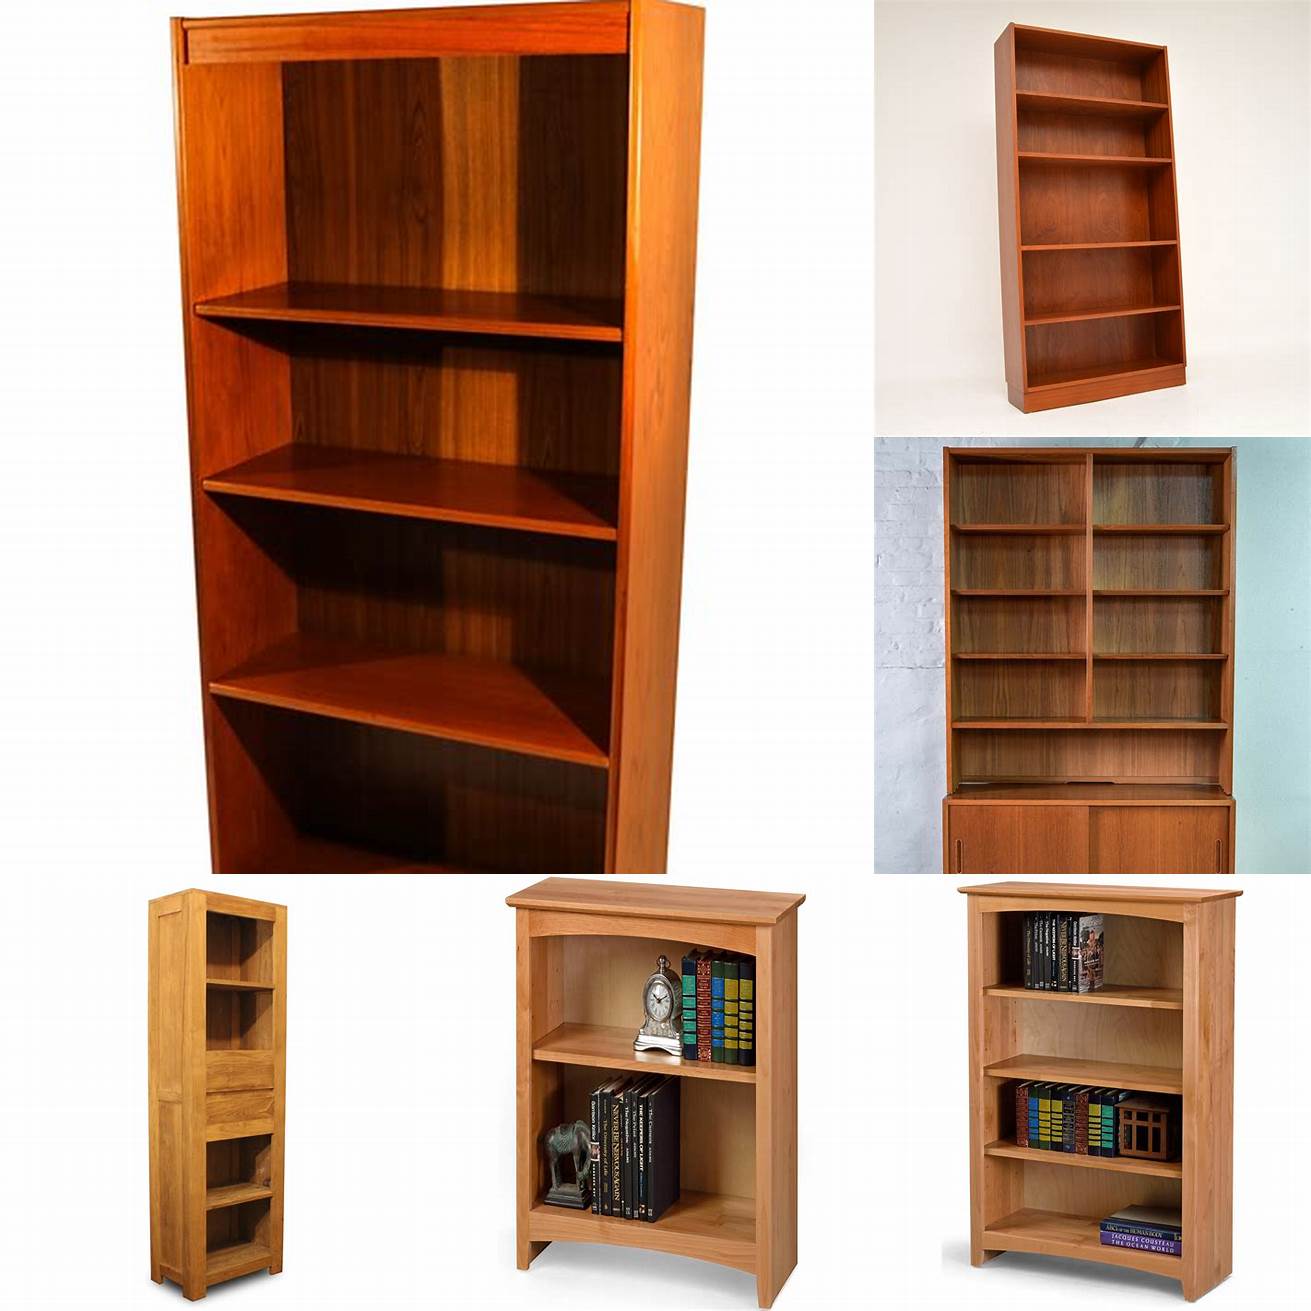 Teak Wood Bookshelf